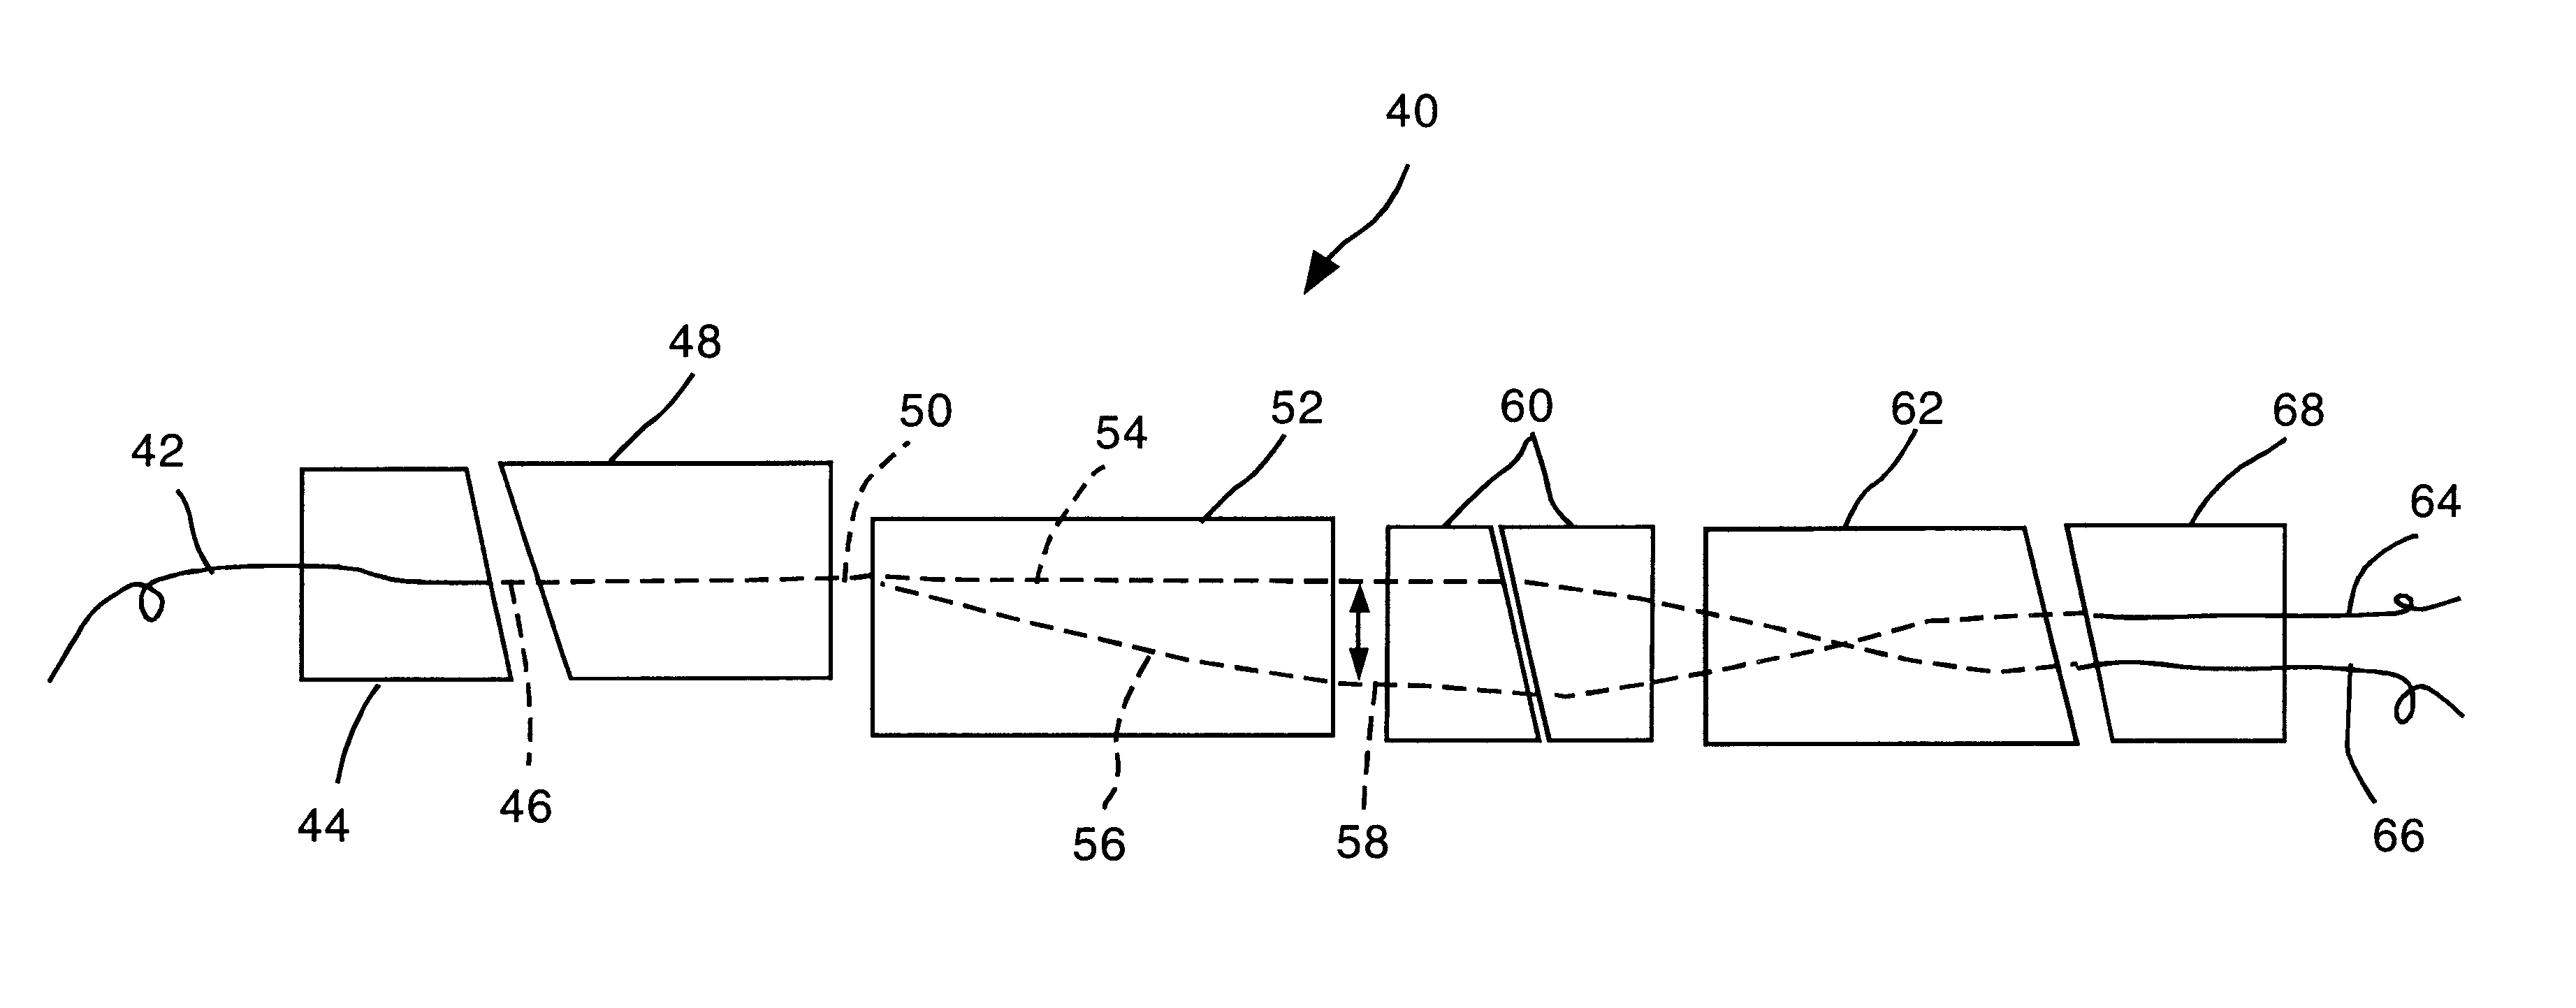 Optical polarization beam combiner/splitter